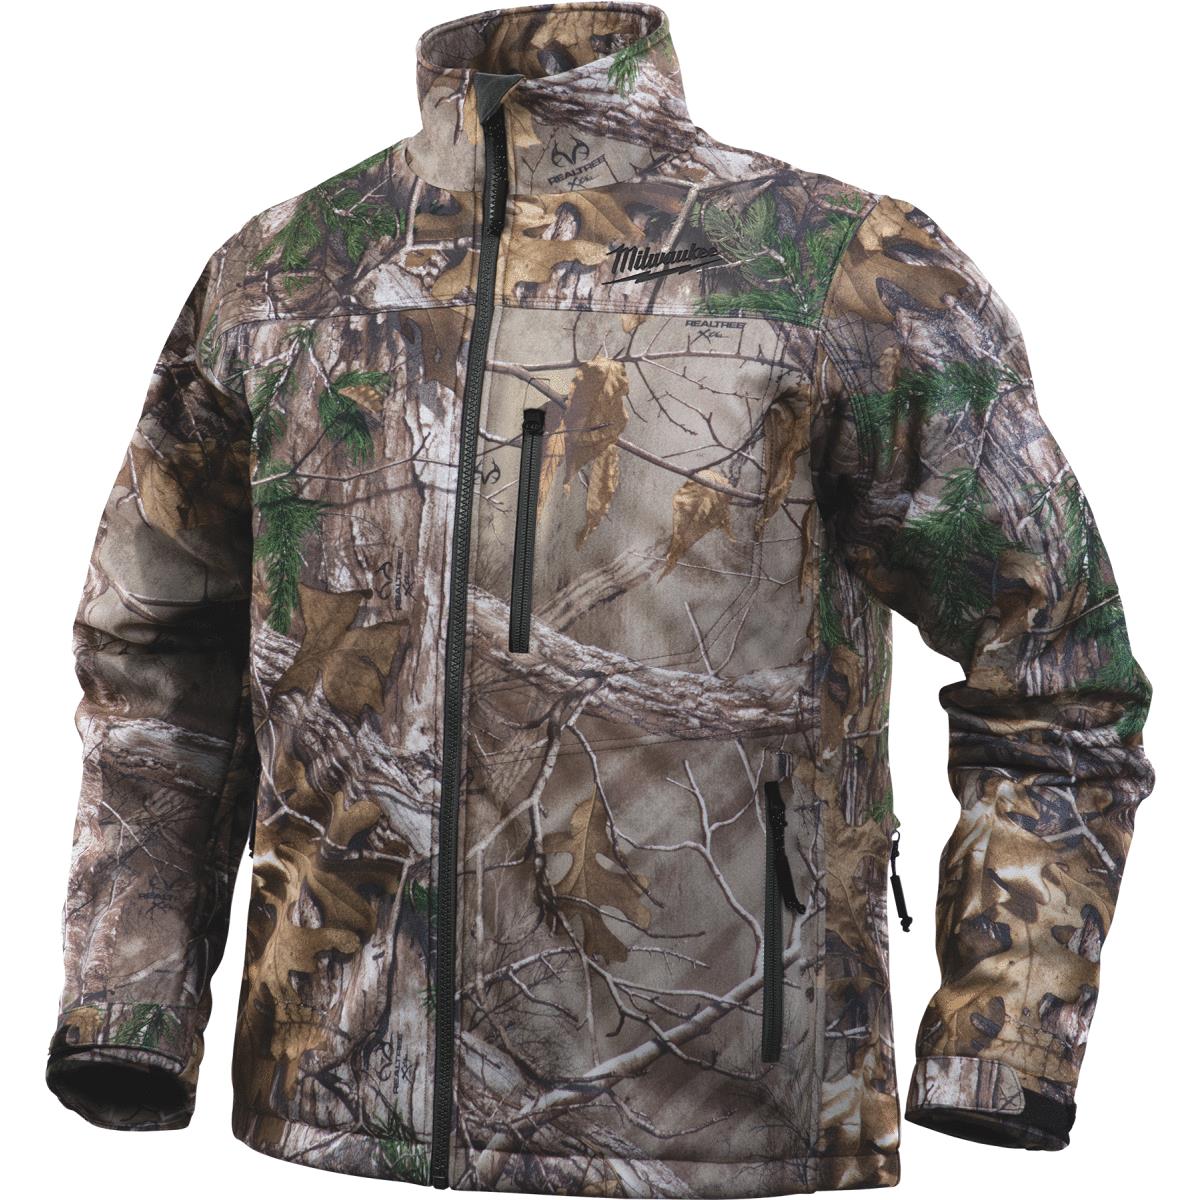 buy-milwaukee-m12-cordless-realtree-camo-heated-jacket-kit-xl-camouflage